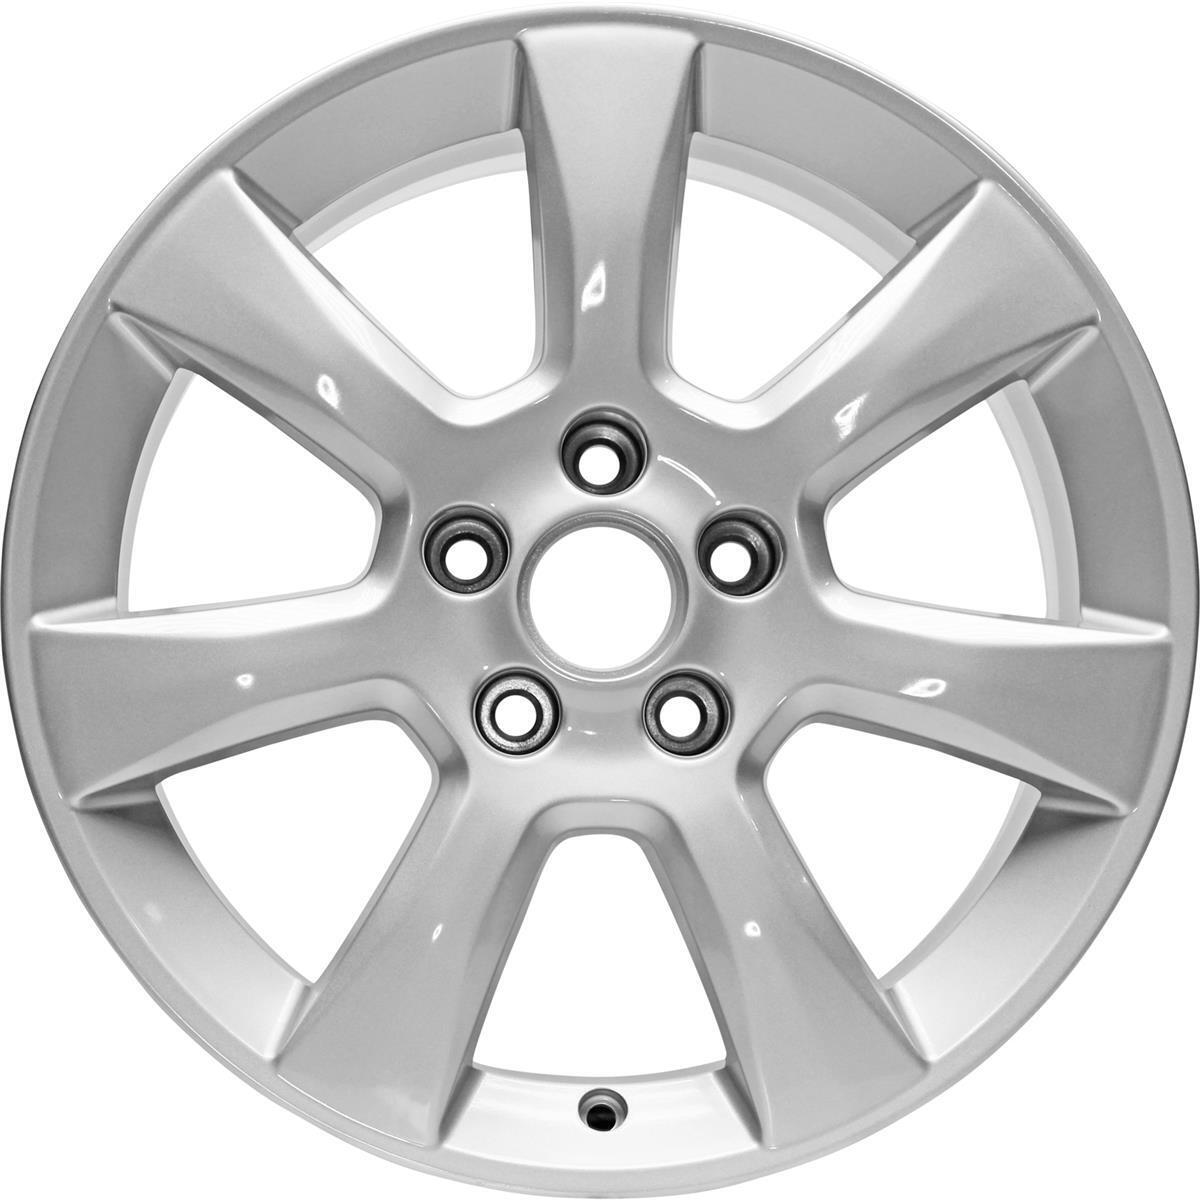 17 inch Aluminum Wheel Rim for 2013-2016 Cadillac Ats 5 Lug Tire for R17